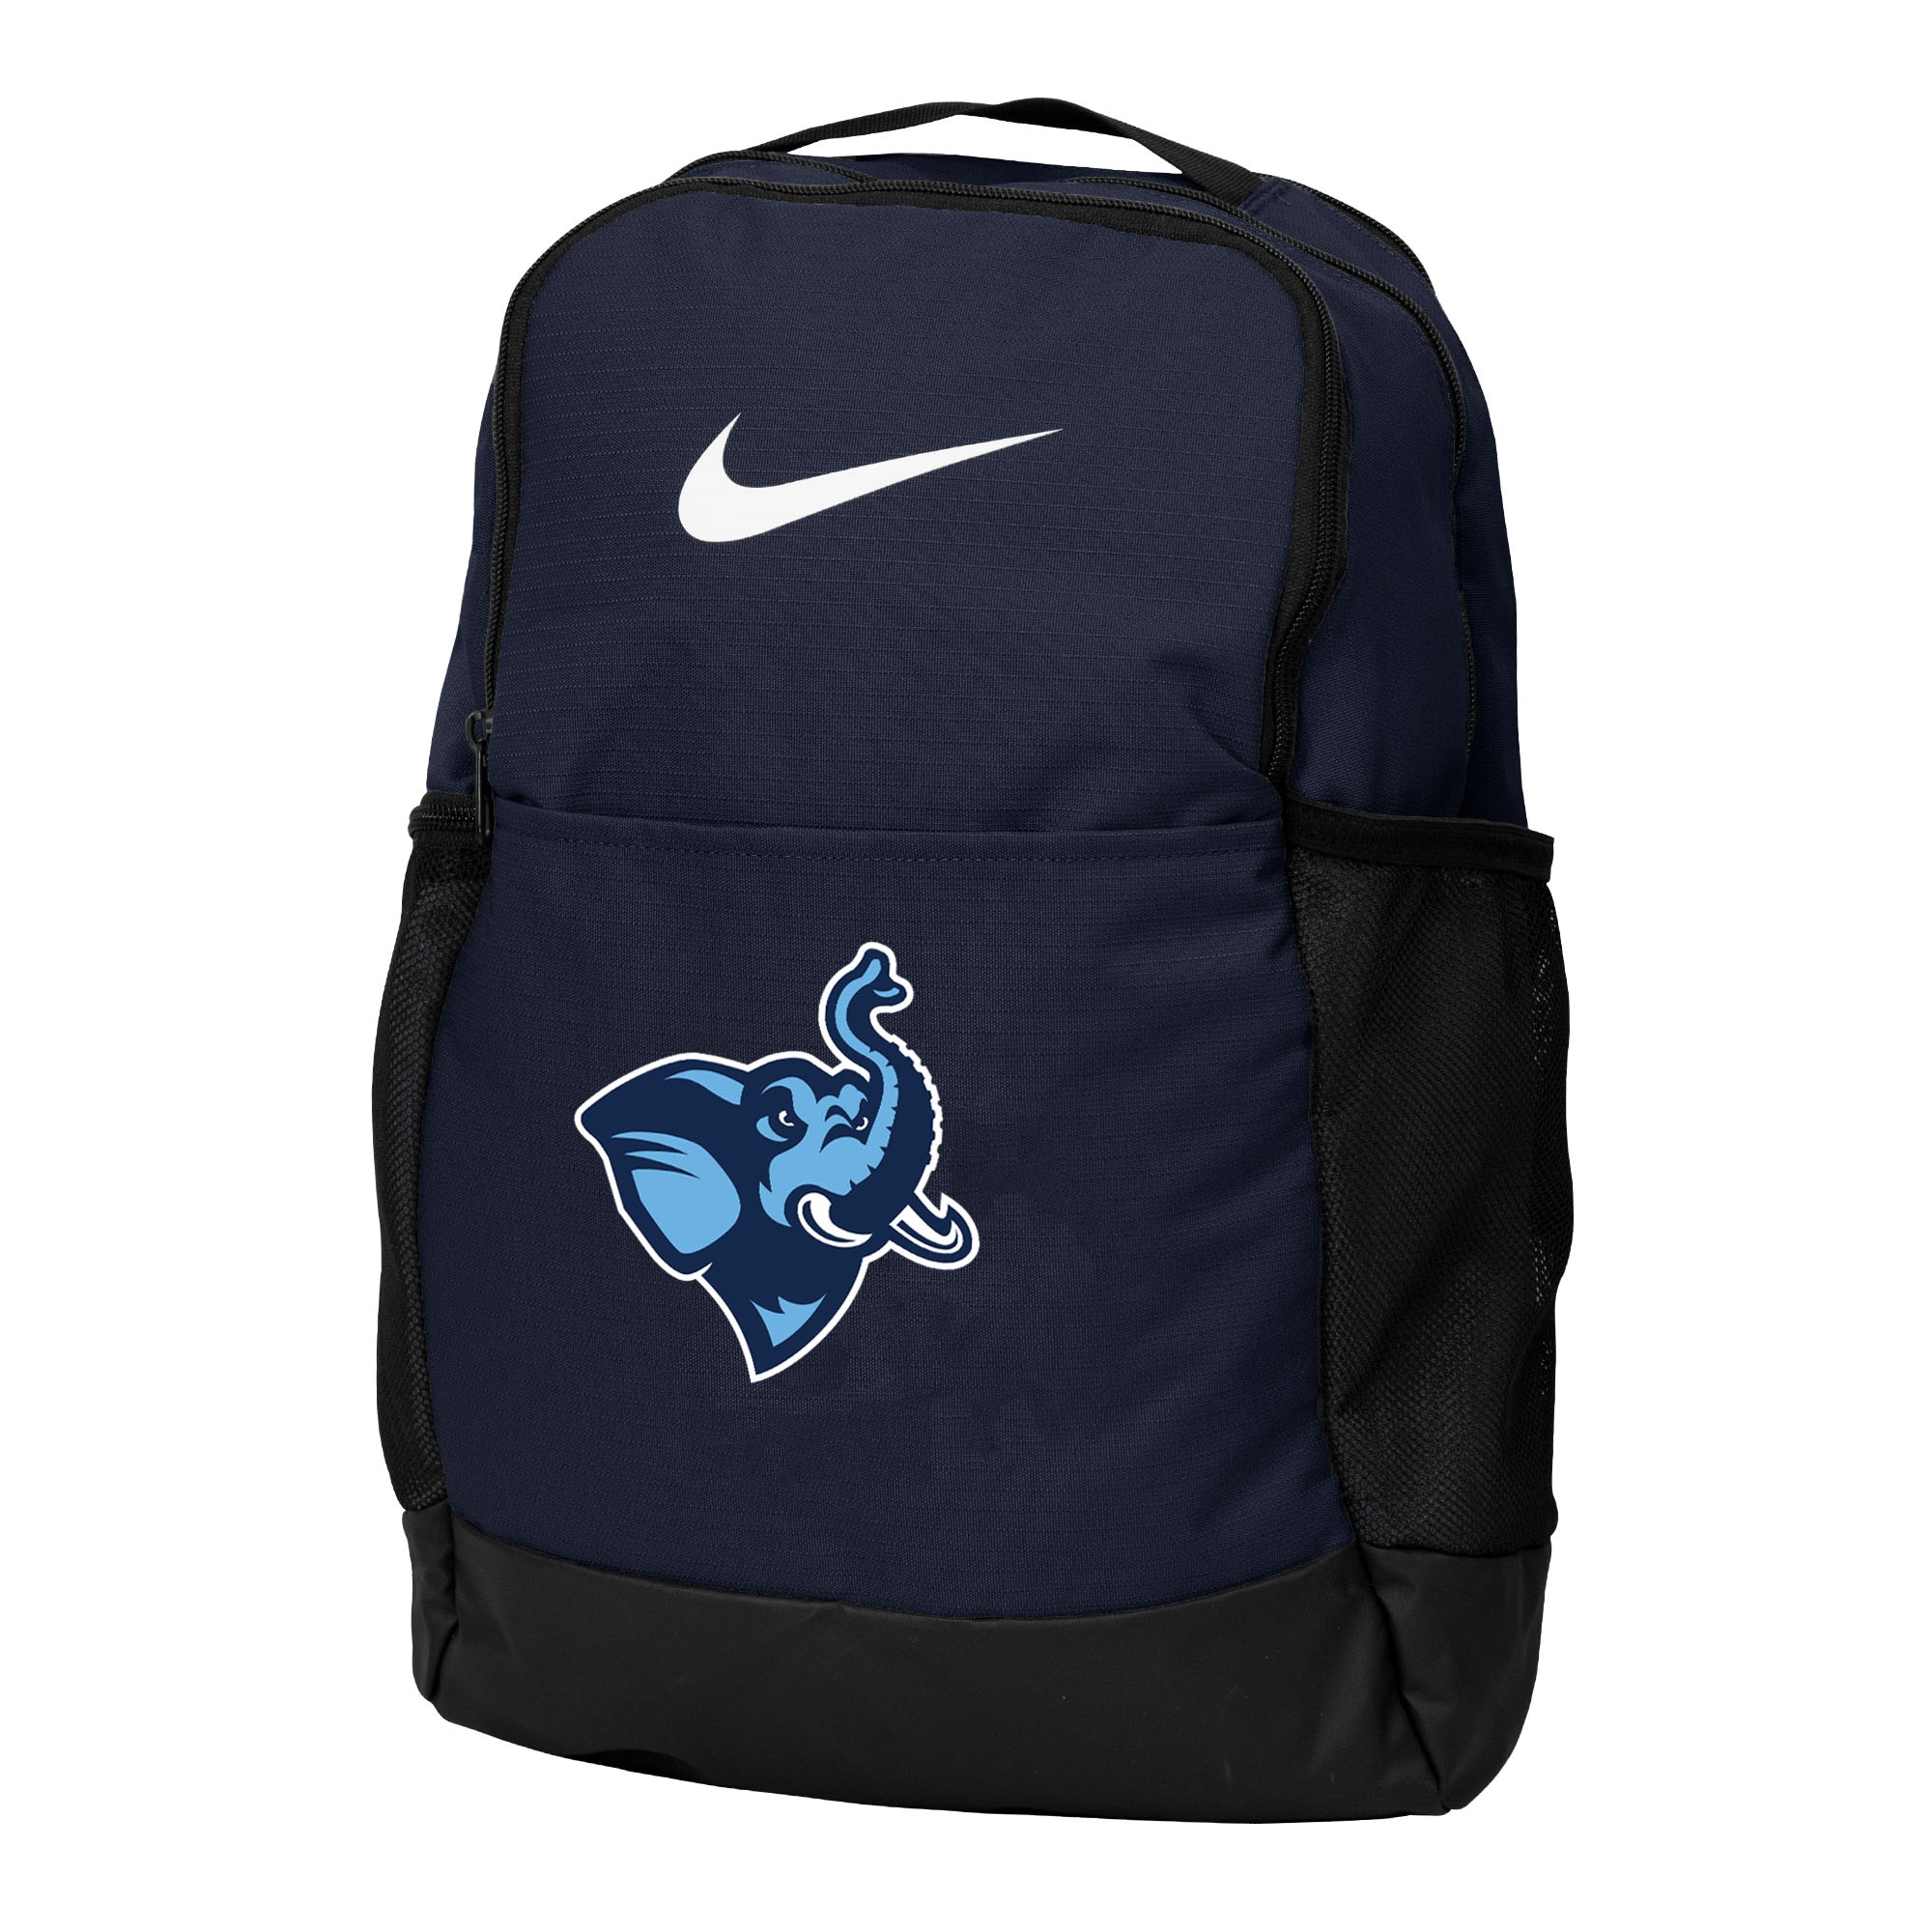 Tufts University Brasilia Backpack Backpacks and Bags